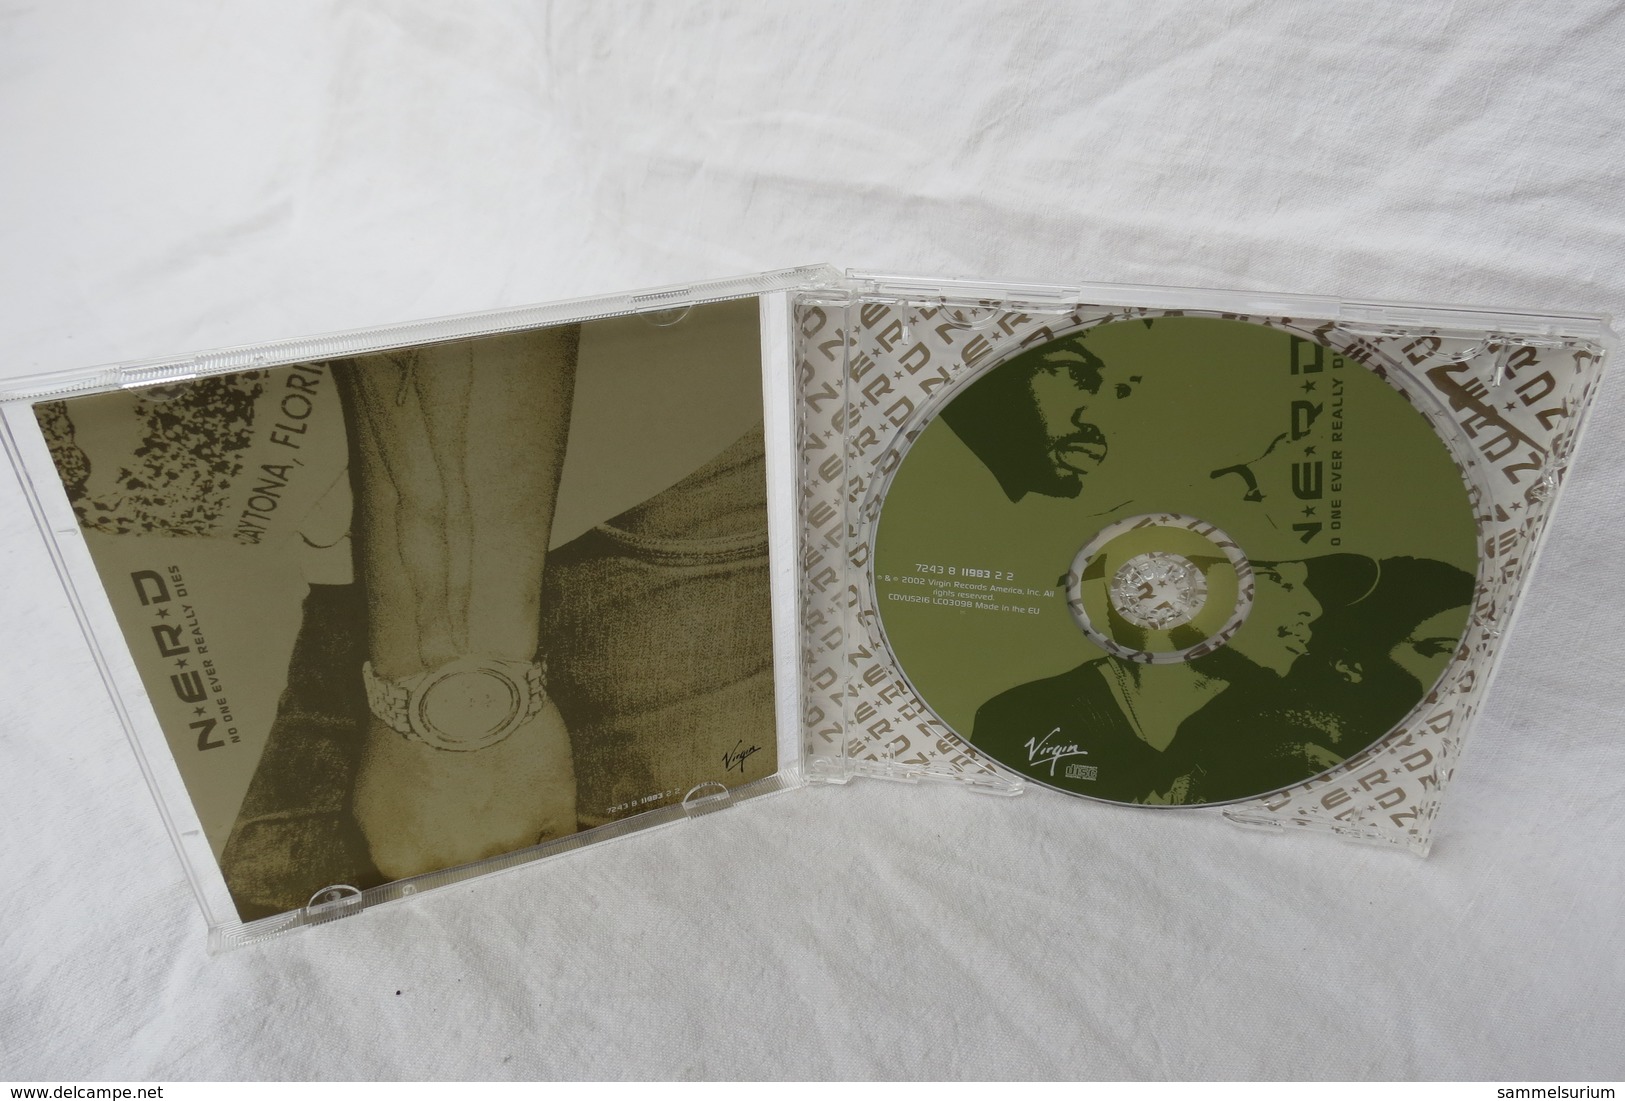 CD "Nerd" In Search Of, No One Ever Really Dies - Rap En Hip Hop